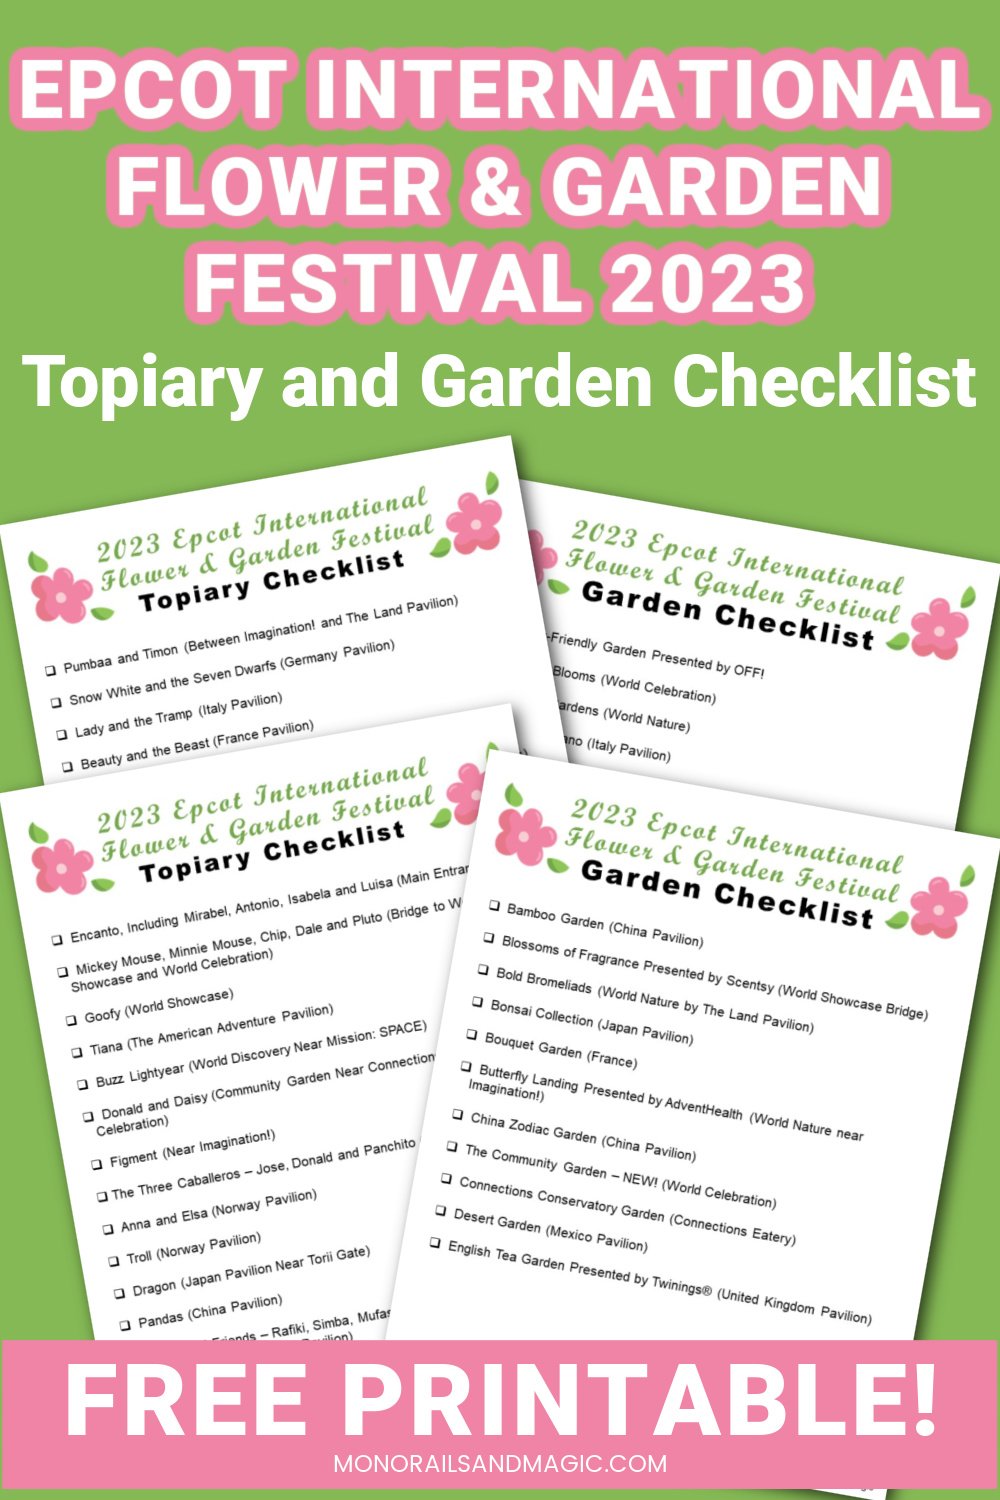 Checklist for the Epcot International Flower and Garden Festival.